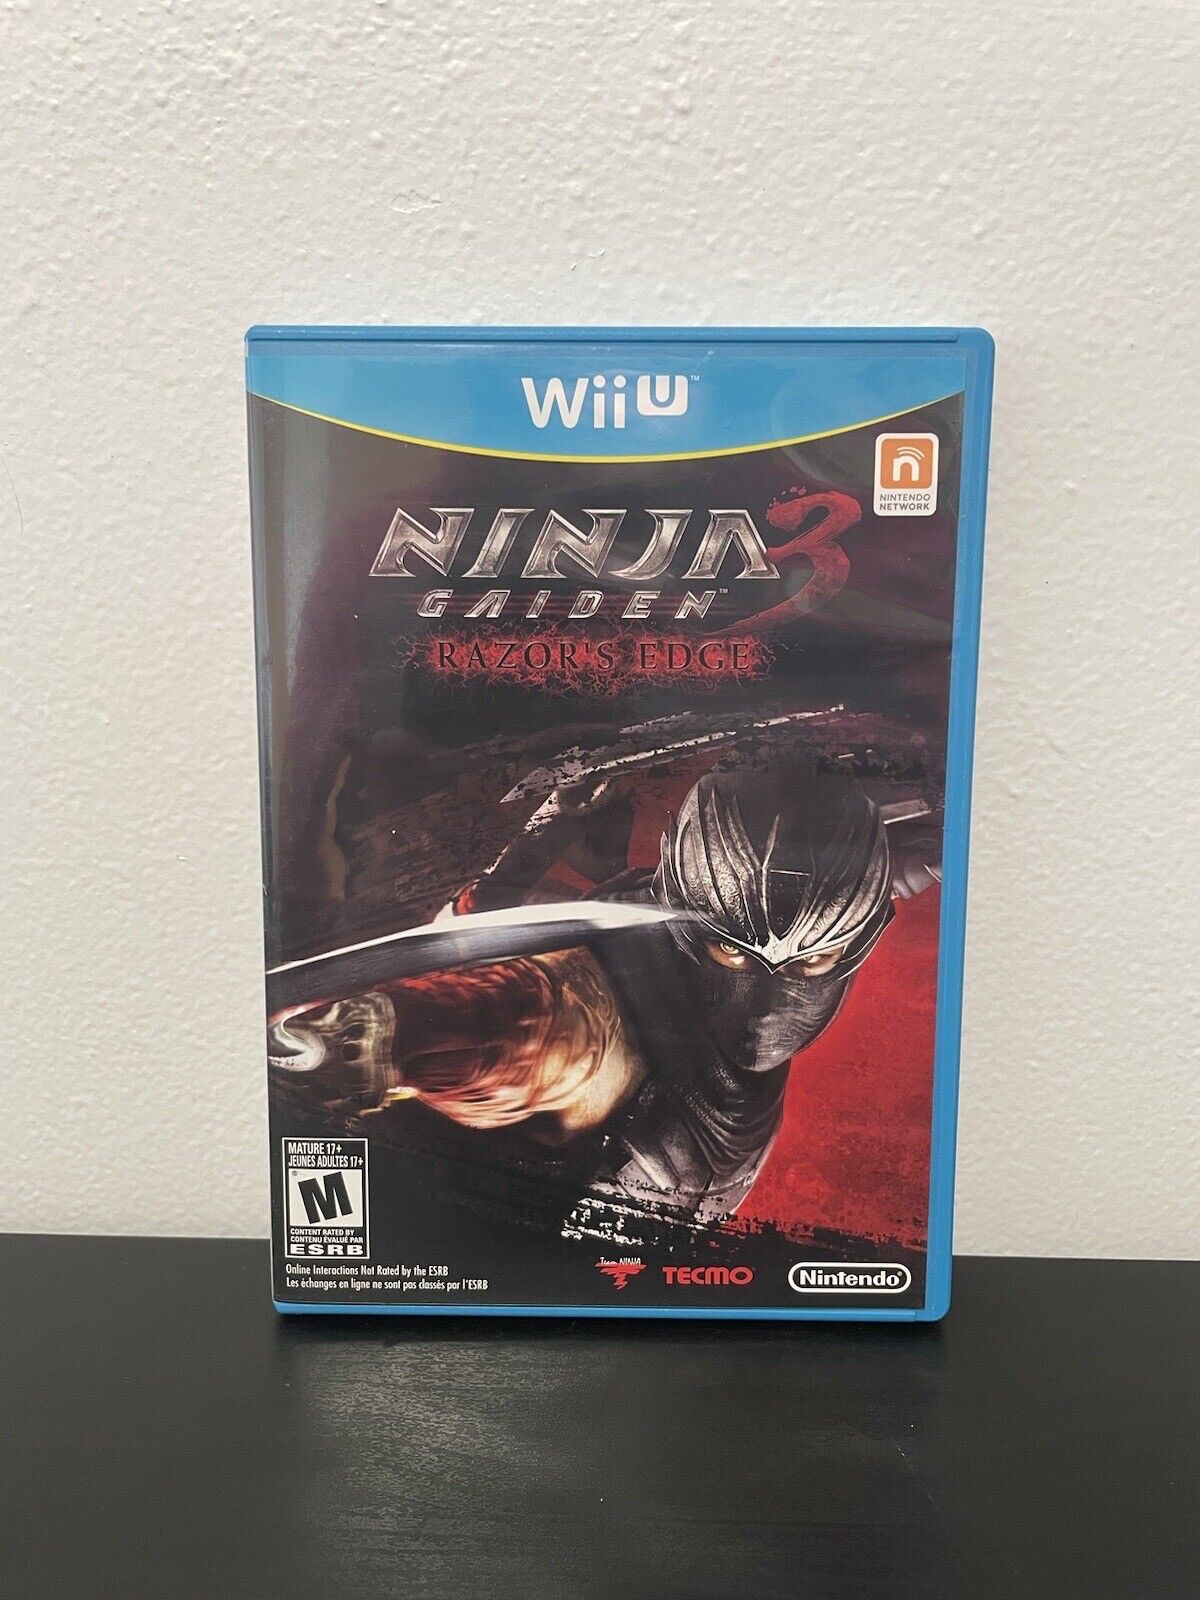 Ninja Gaiden 3 Razors Edge - Nintendo Wii U - Mint - Tecmo - Video Game